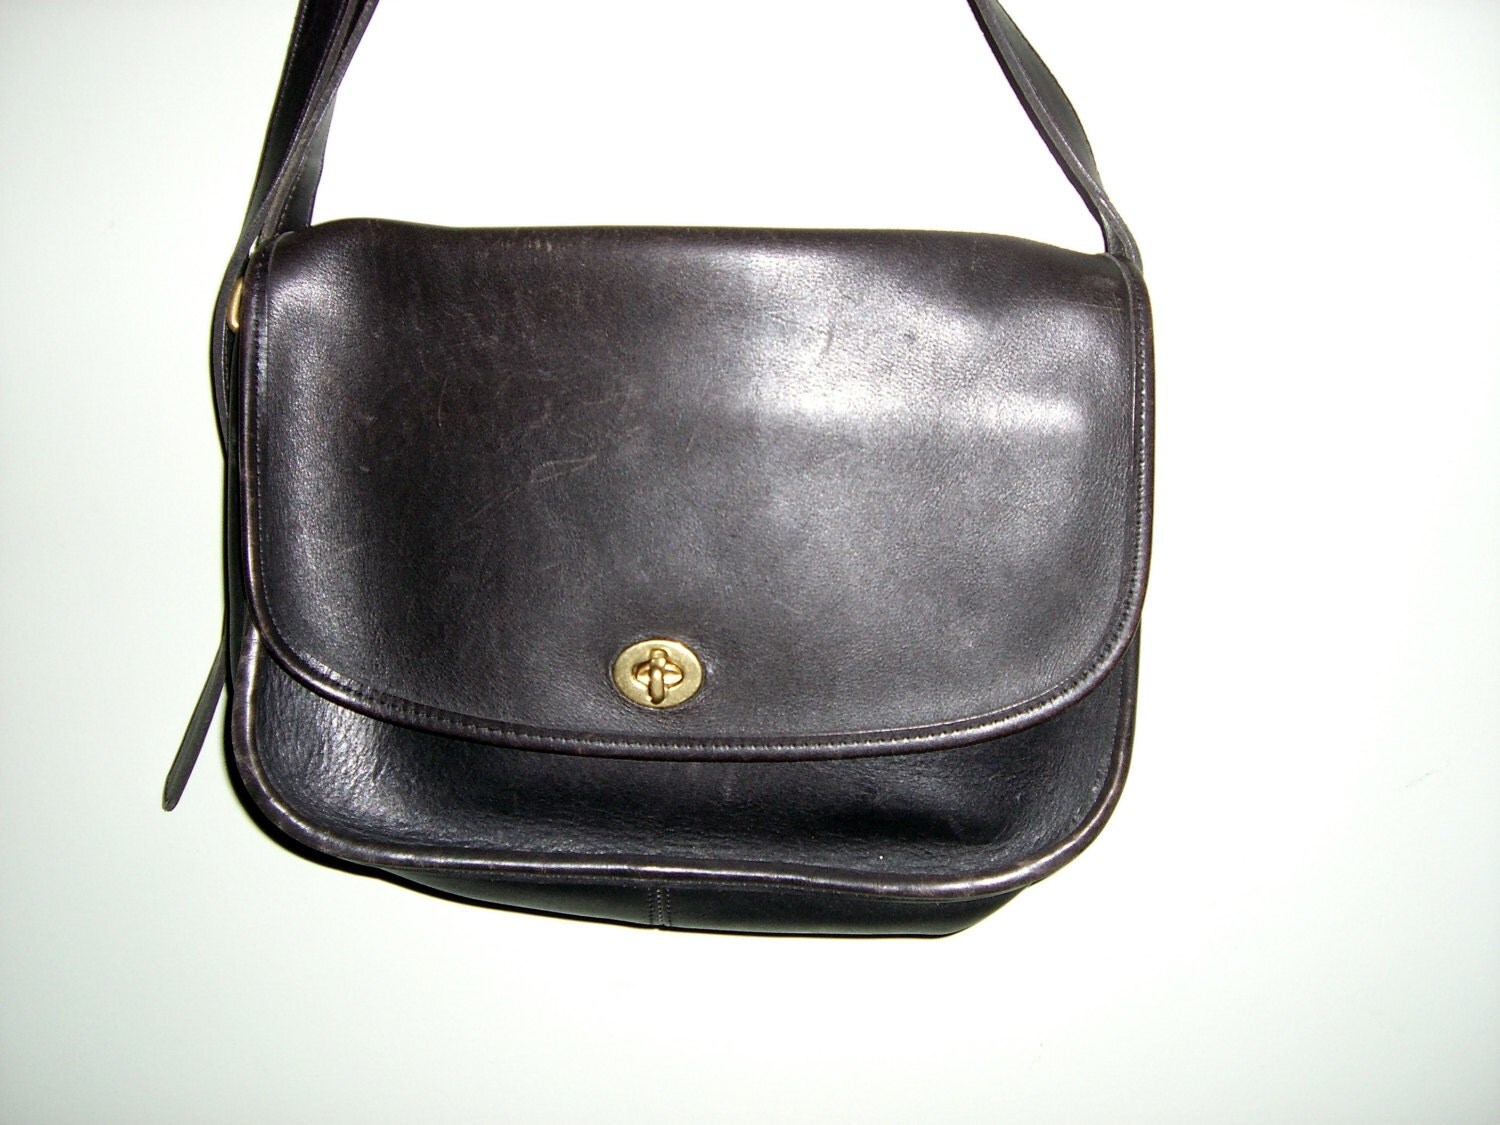 Vintage genuine Coach Leather Handbag by honeybeepollen on Etsy